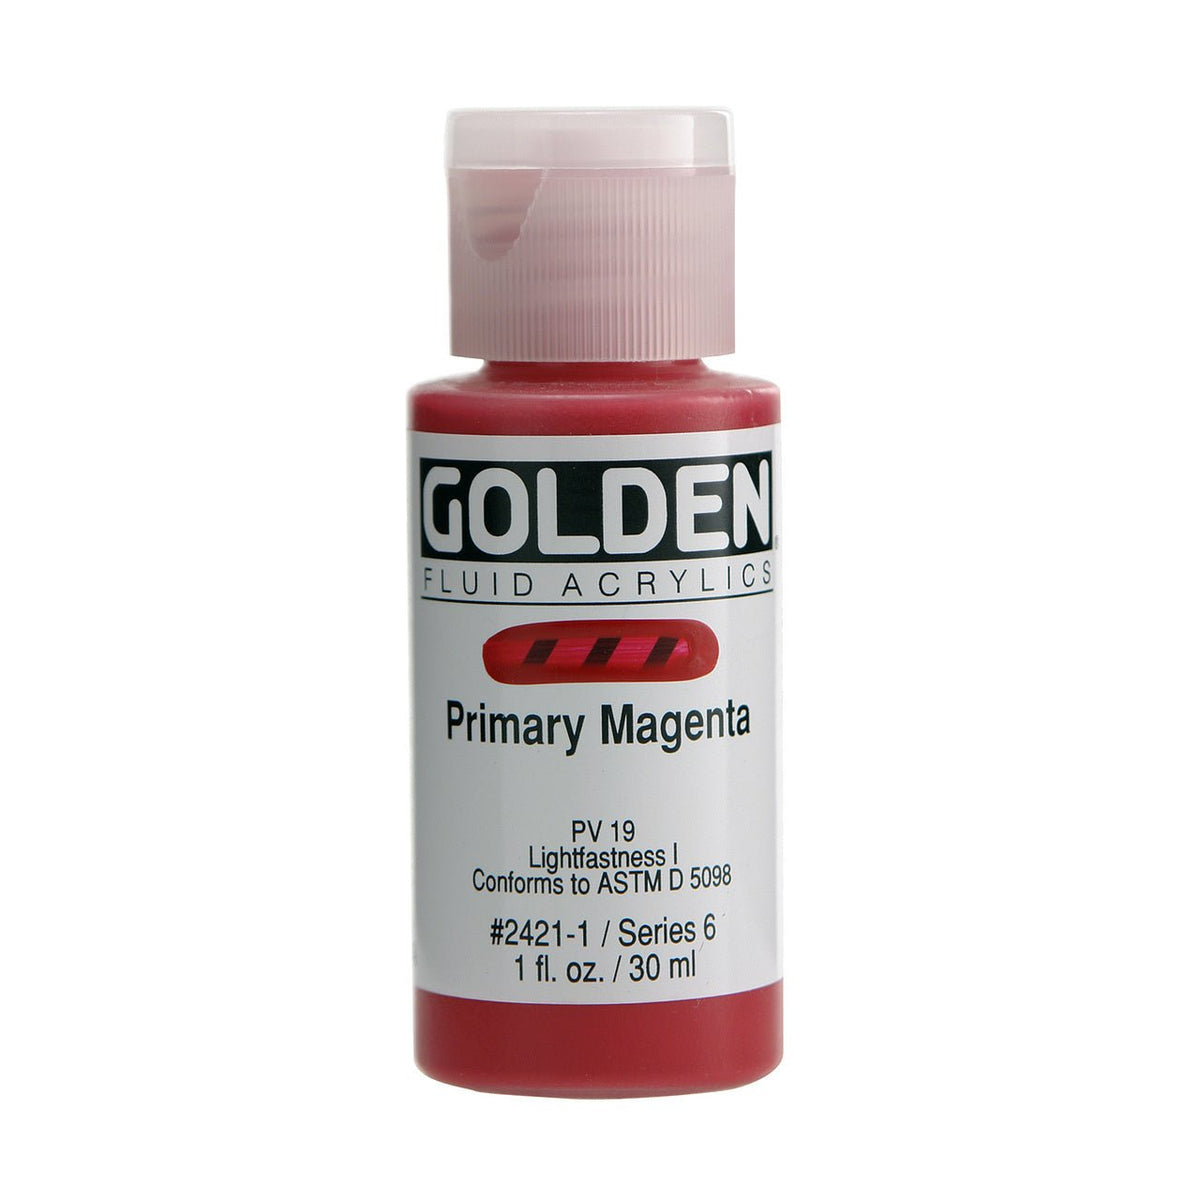 Golden Fluid Acrylic Primary Magenta 1 oz - merriartist.com